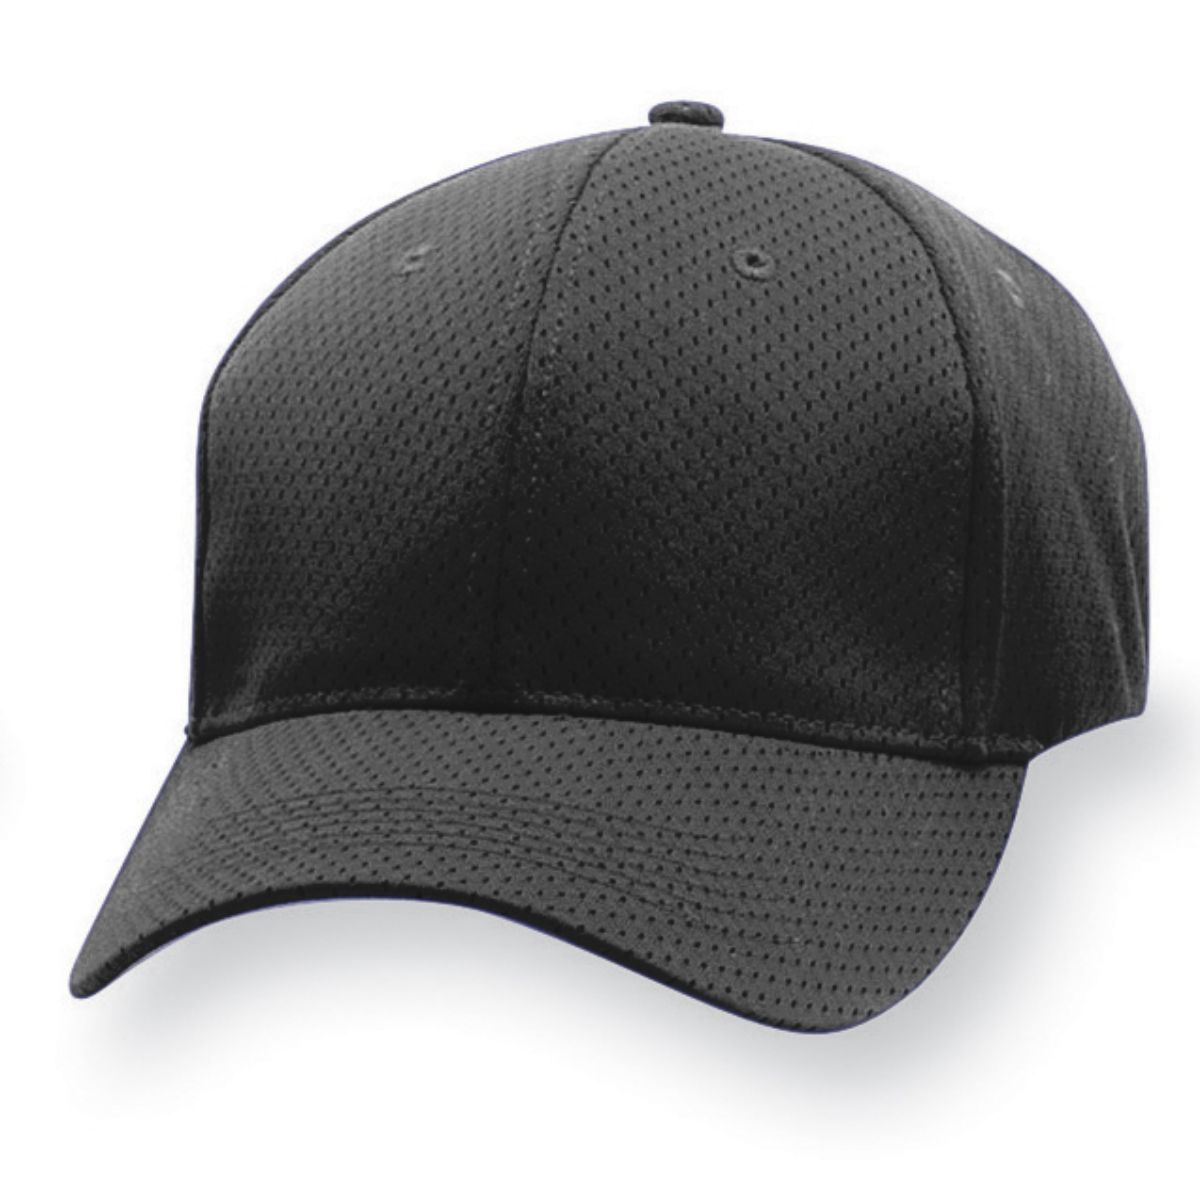 YOUTH SPORT FLEX ATHLETIC MESH CAP from Augusta Sportswear